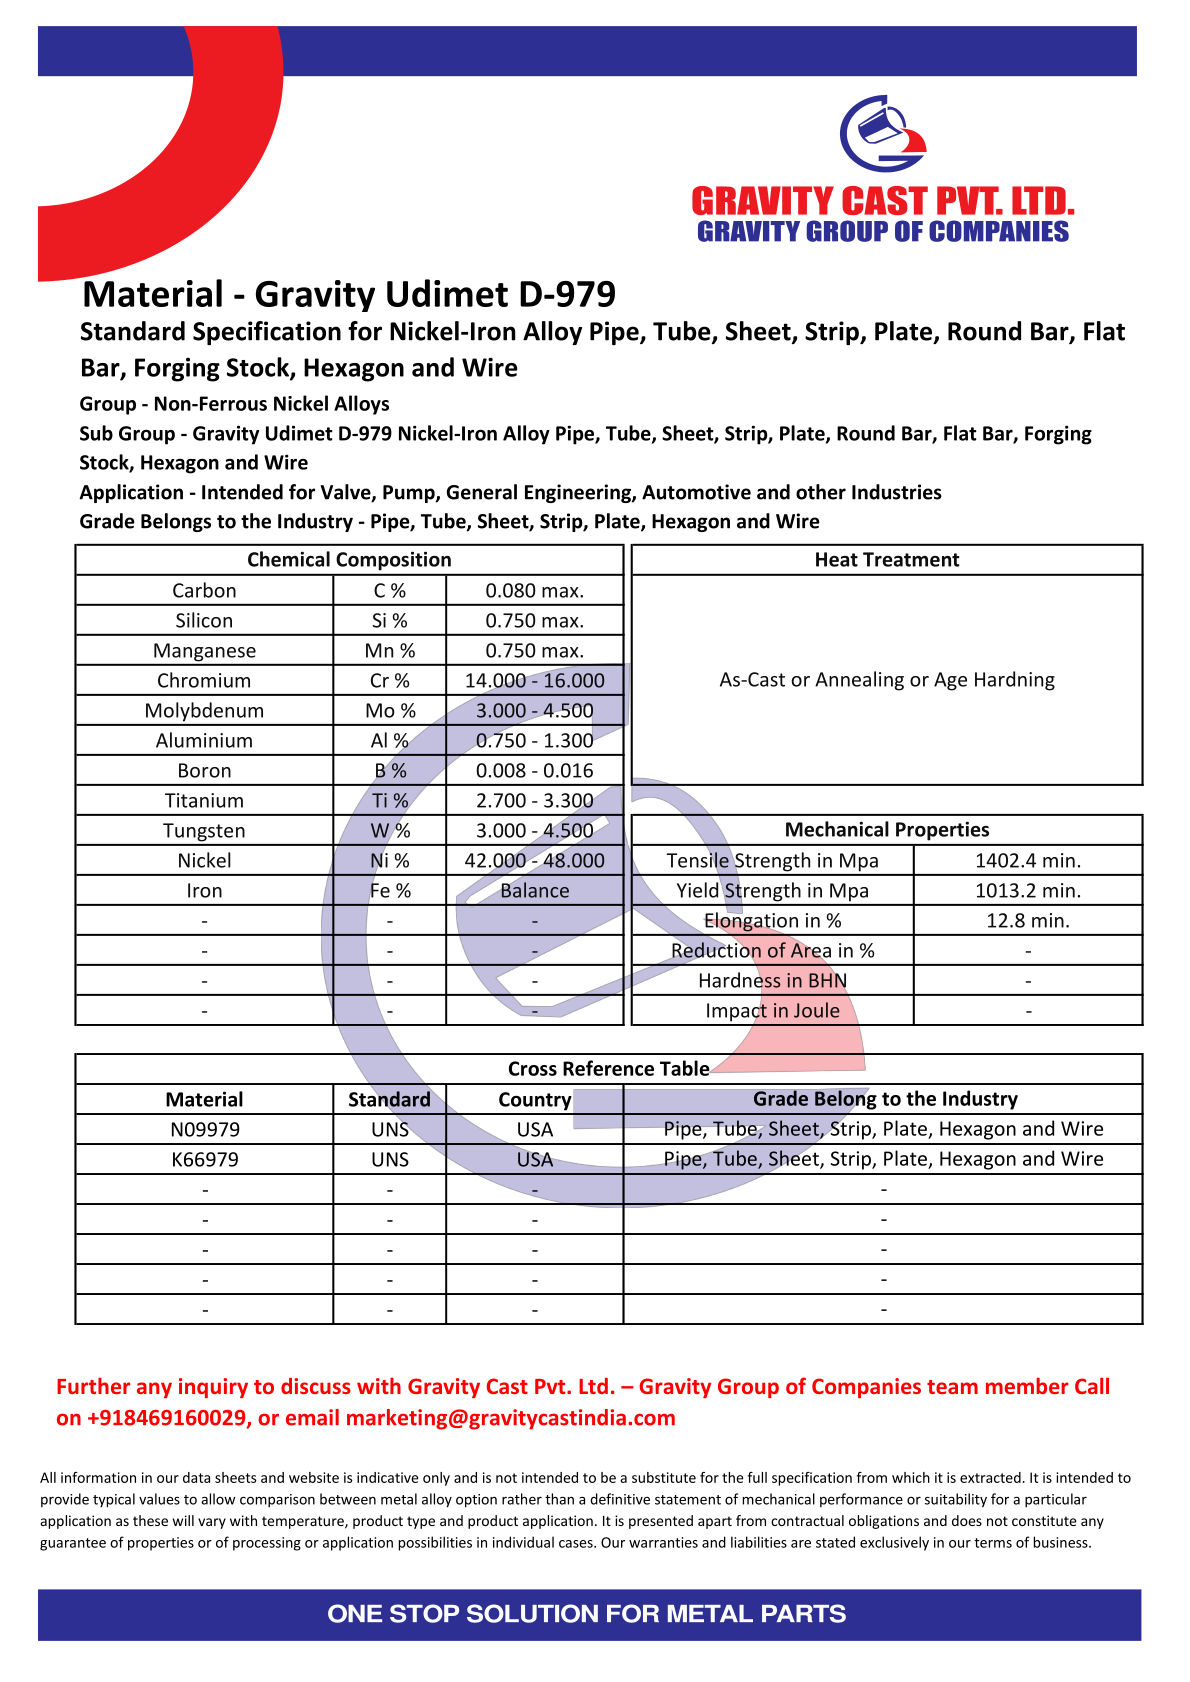 Gravity Udimet D-979.pdf